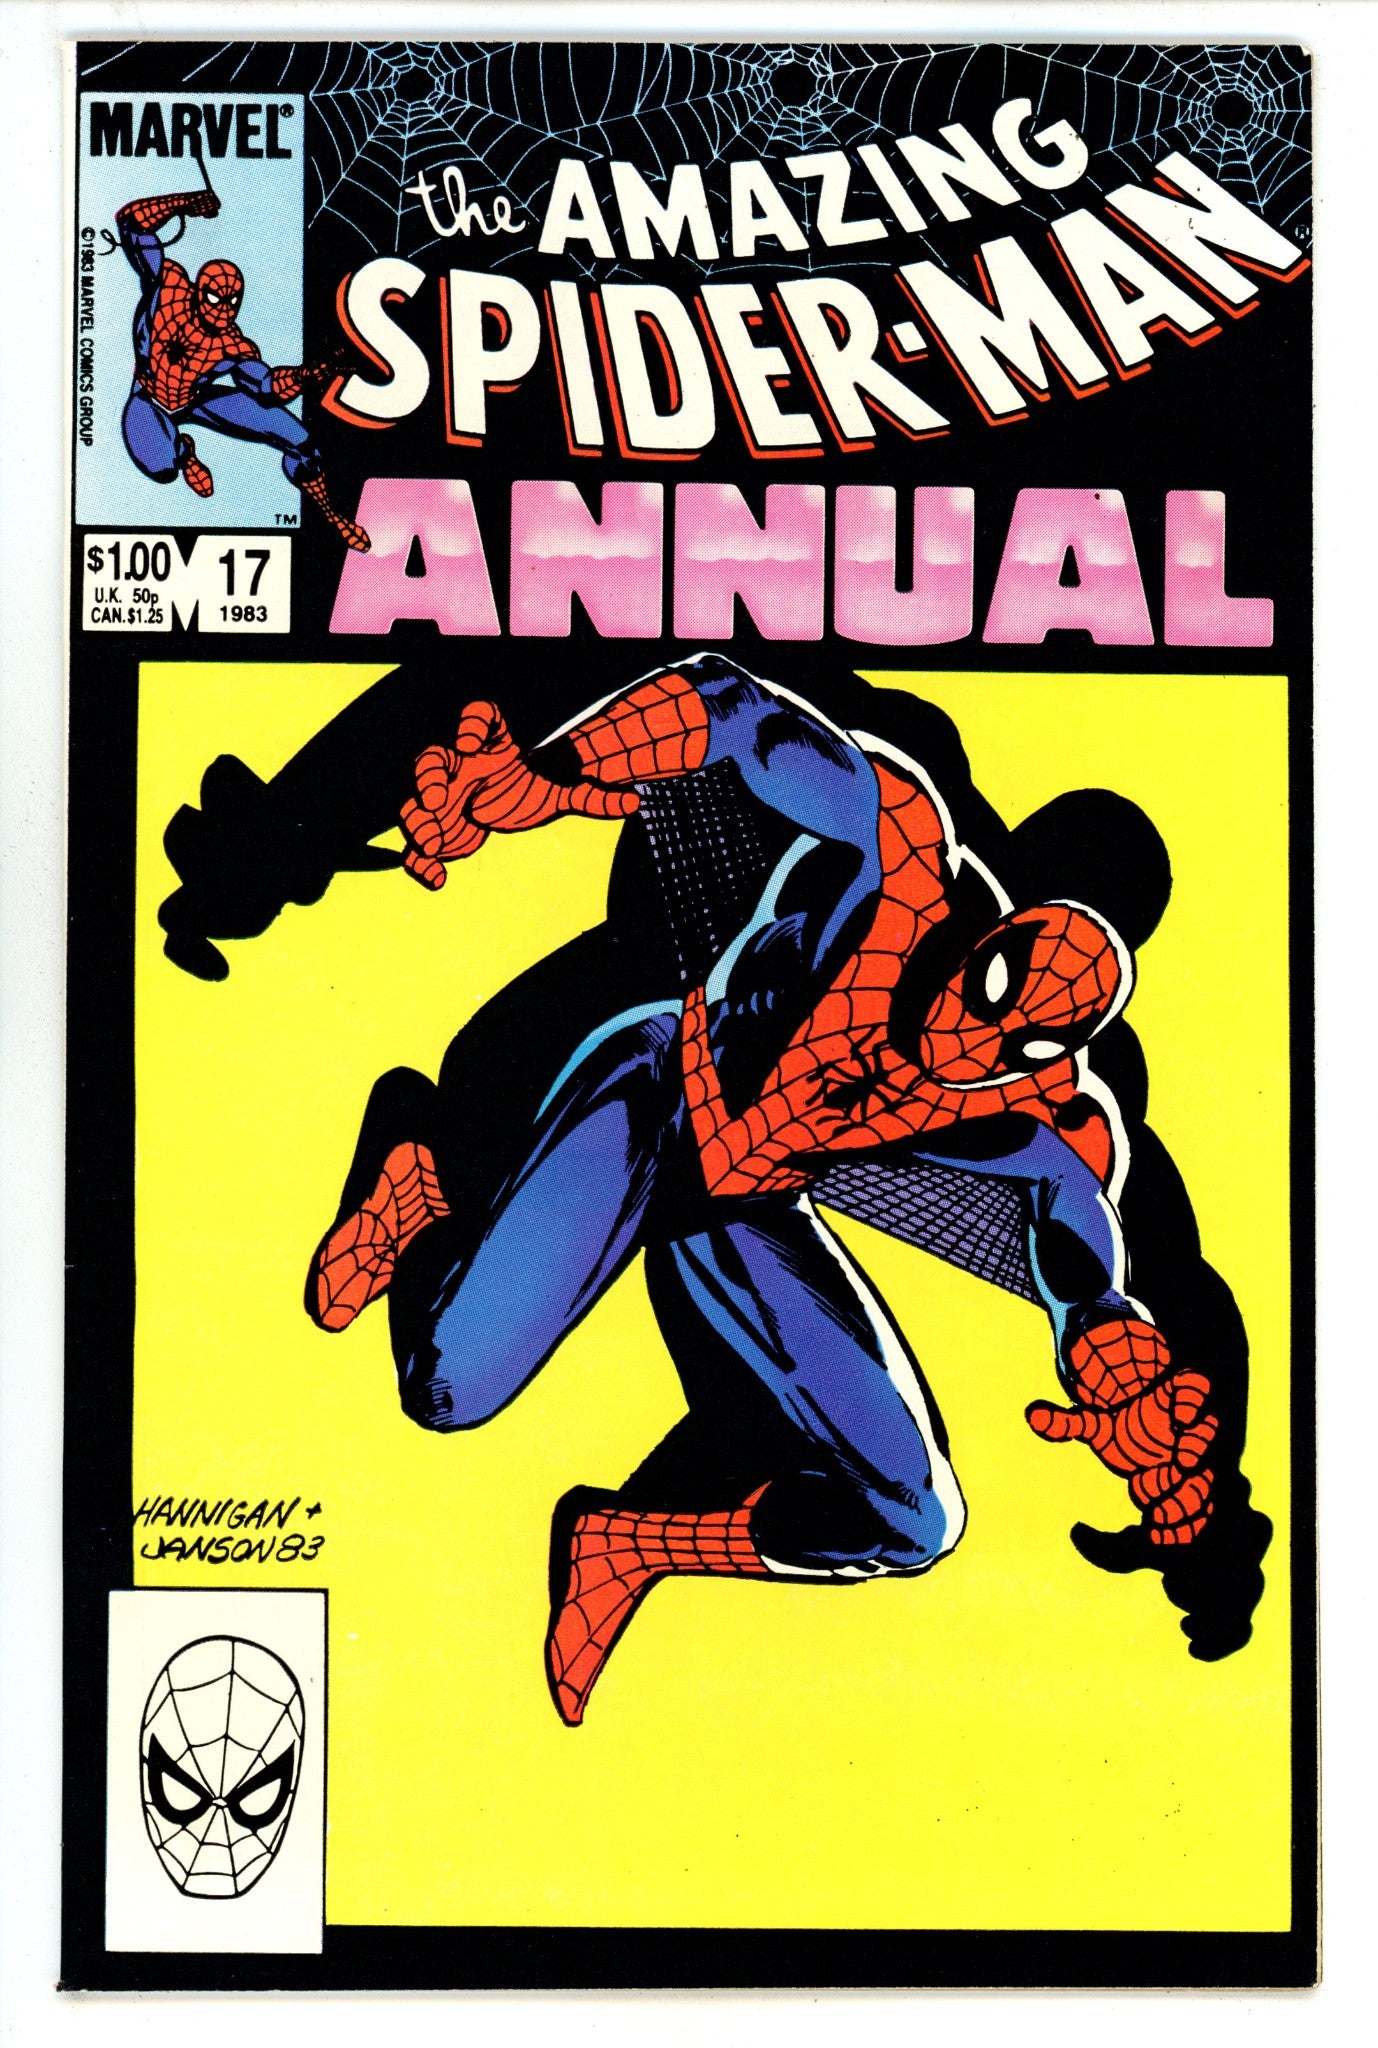 The Amazing Spider-Man Annual Vol 1 17 VF/NM (9.0) (1983) 